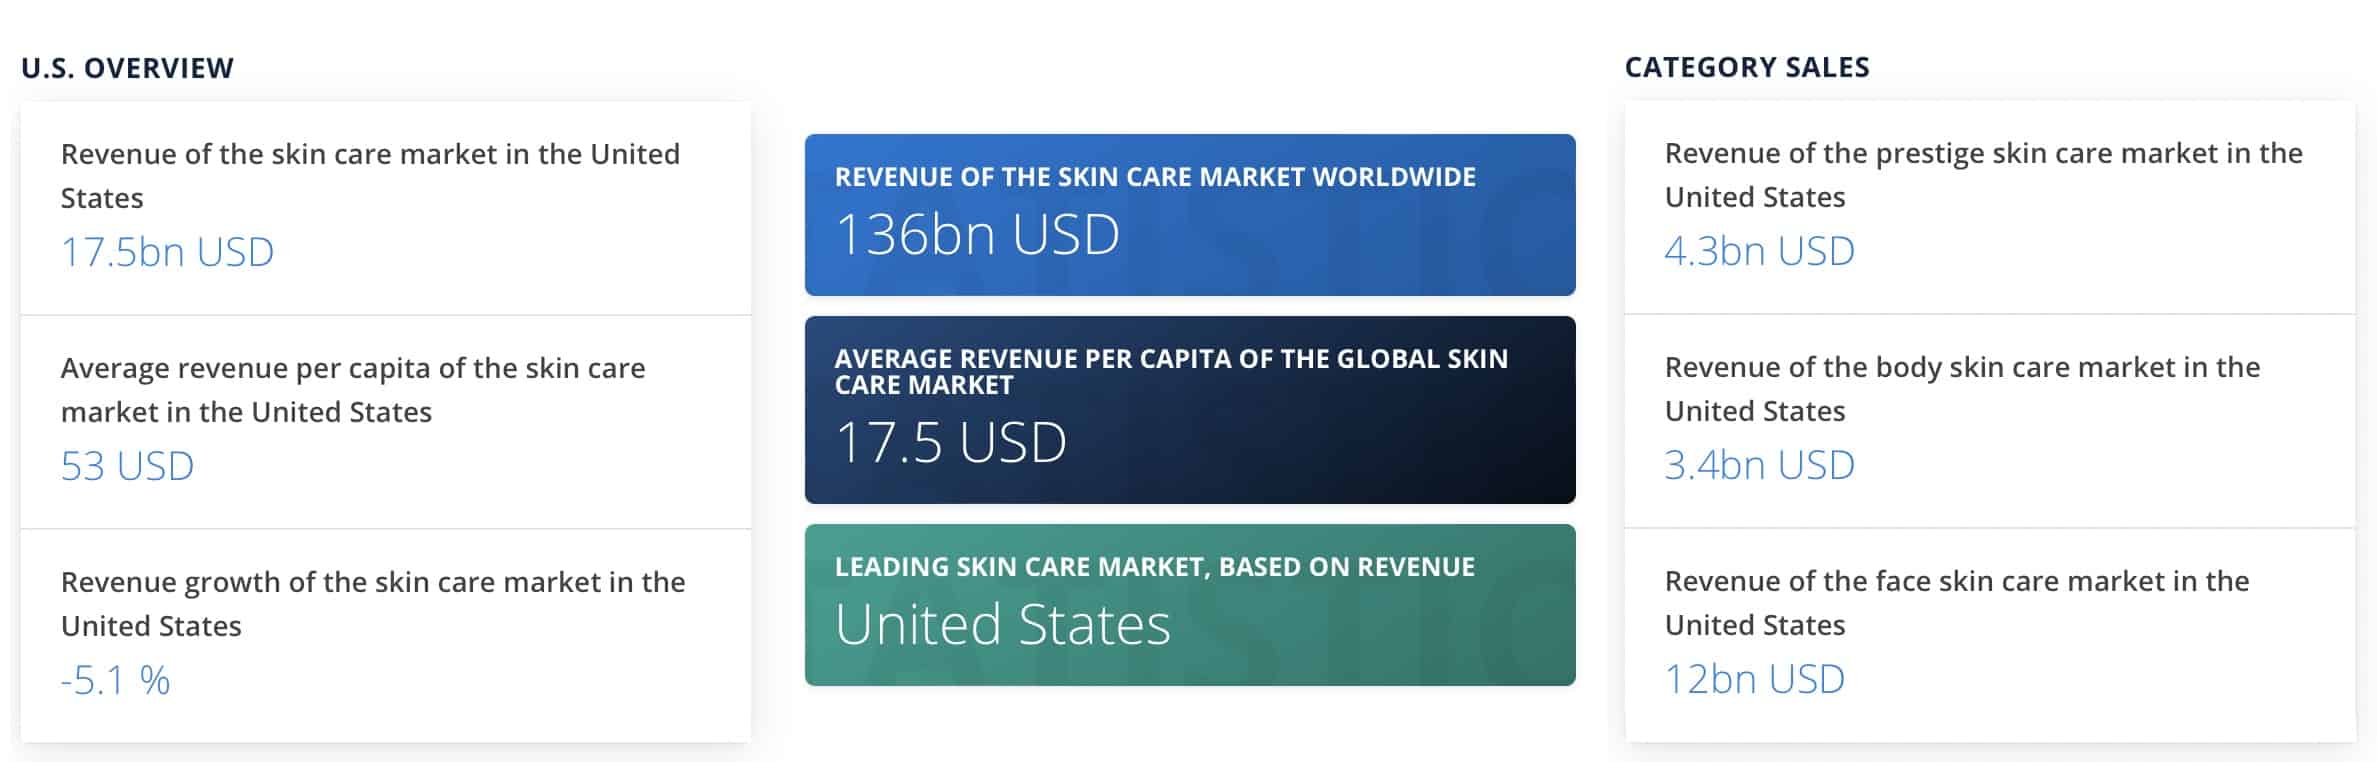 US Skincare market data